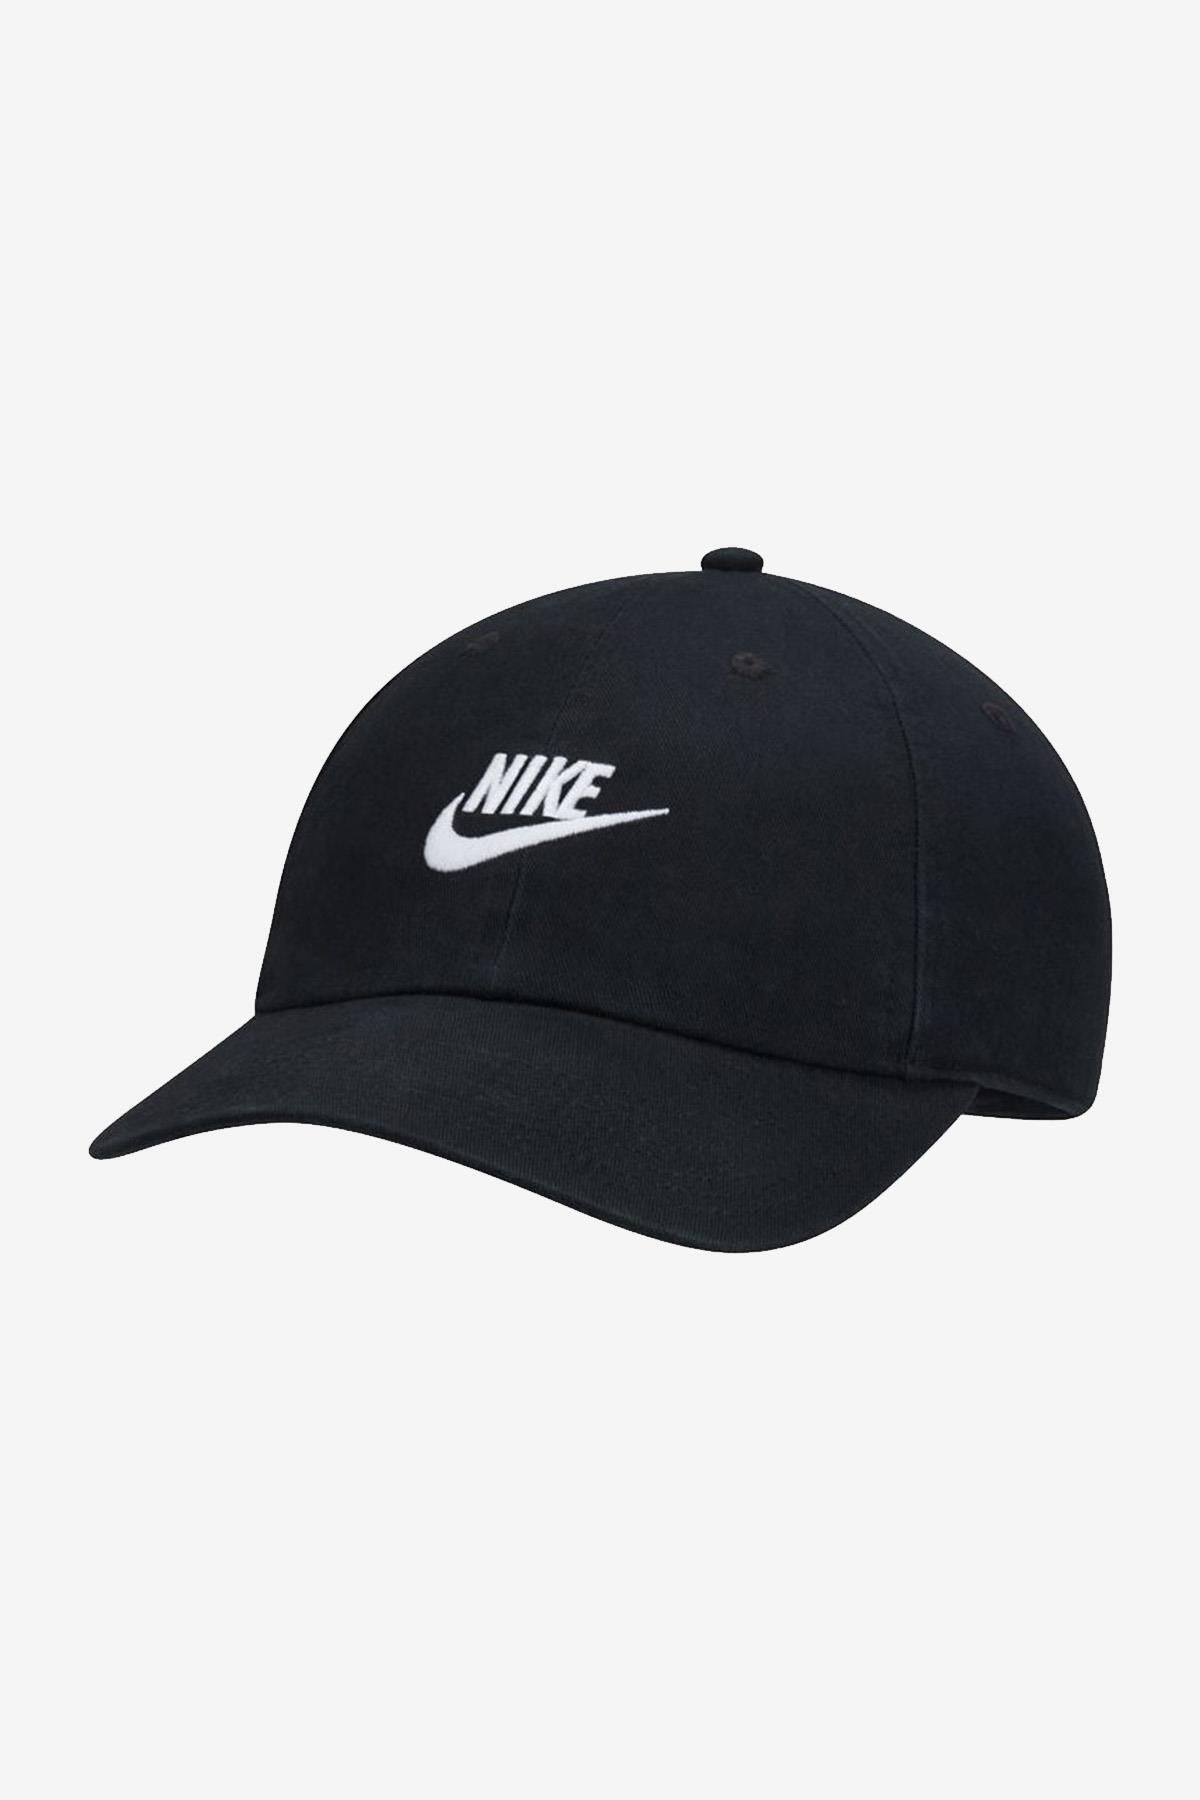 Nike U NSW H86 Futura Wash 913011-010 کلاه سیاه